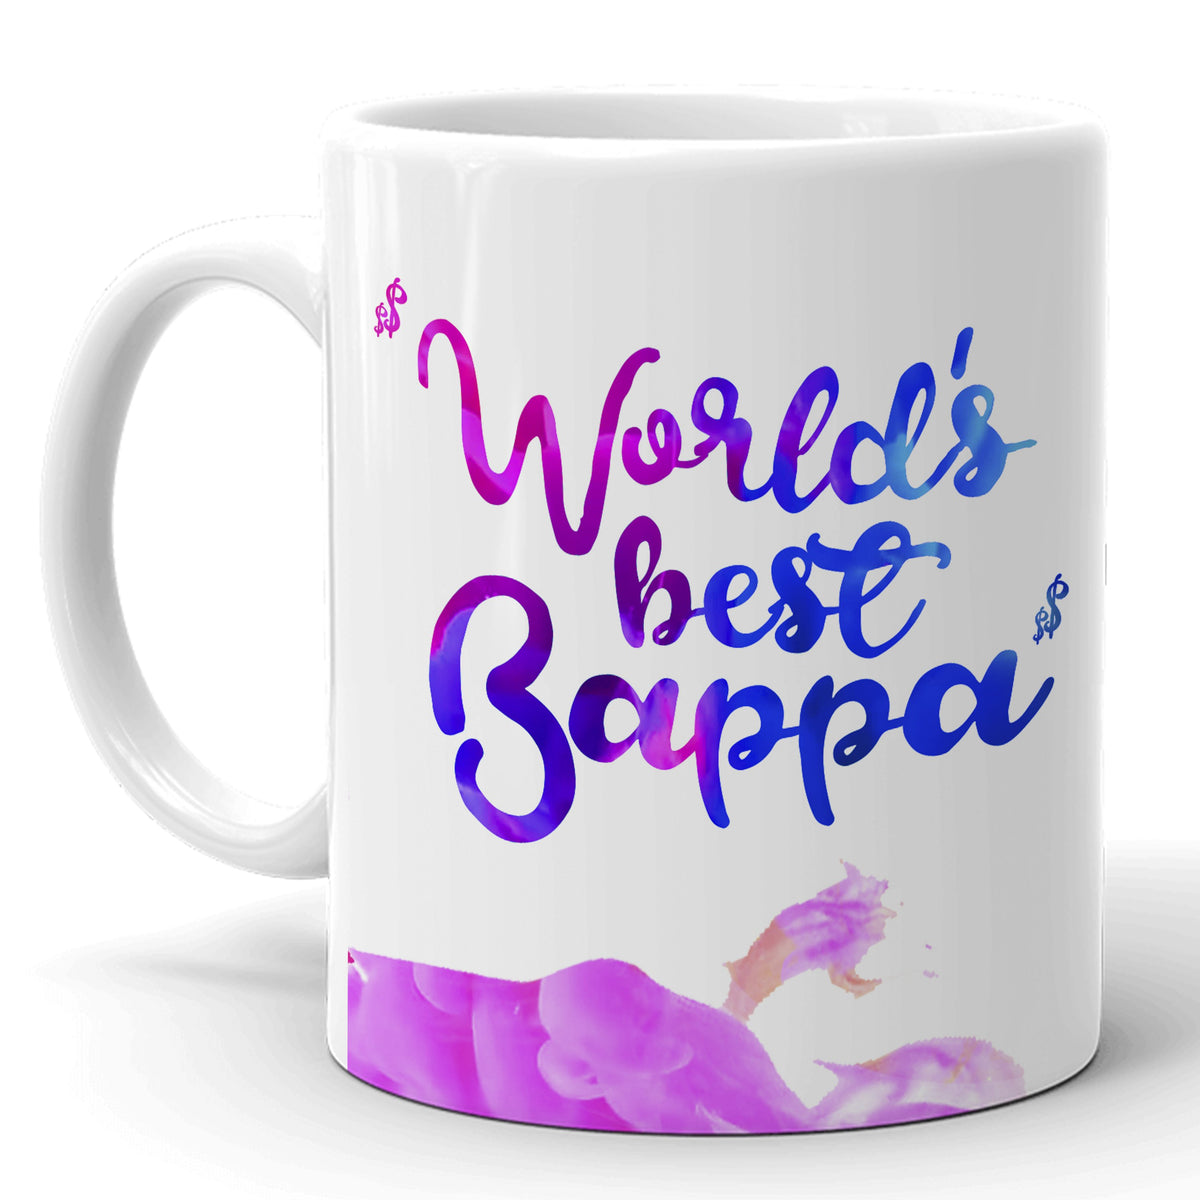 Worlds Best Bappa Mug